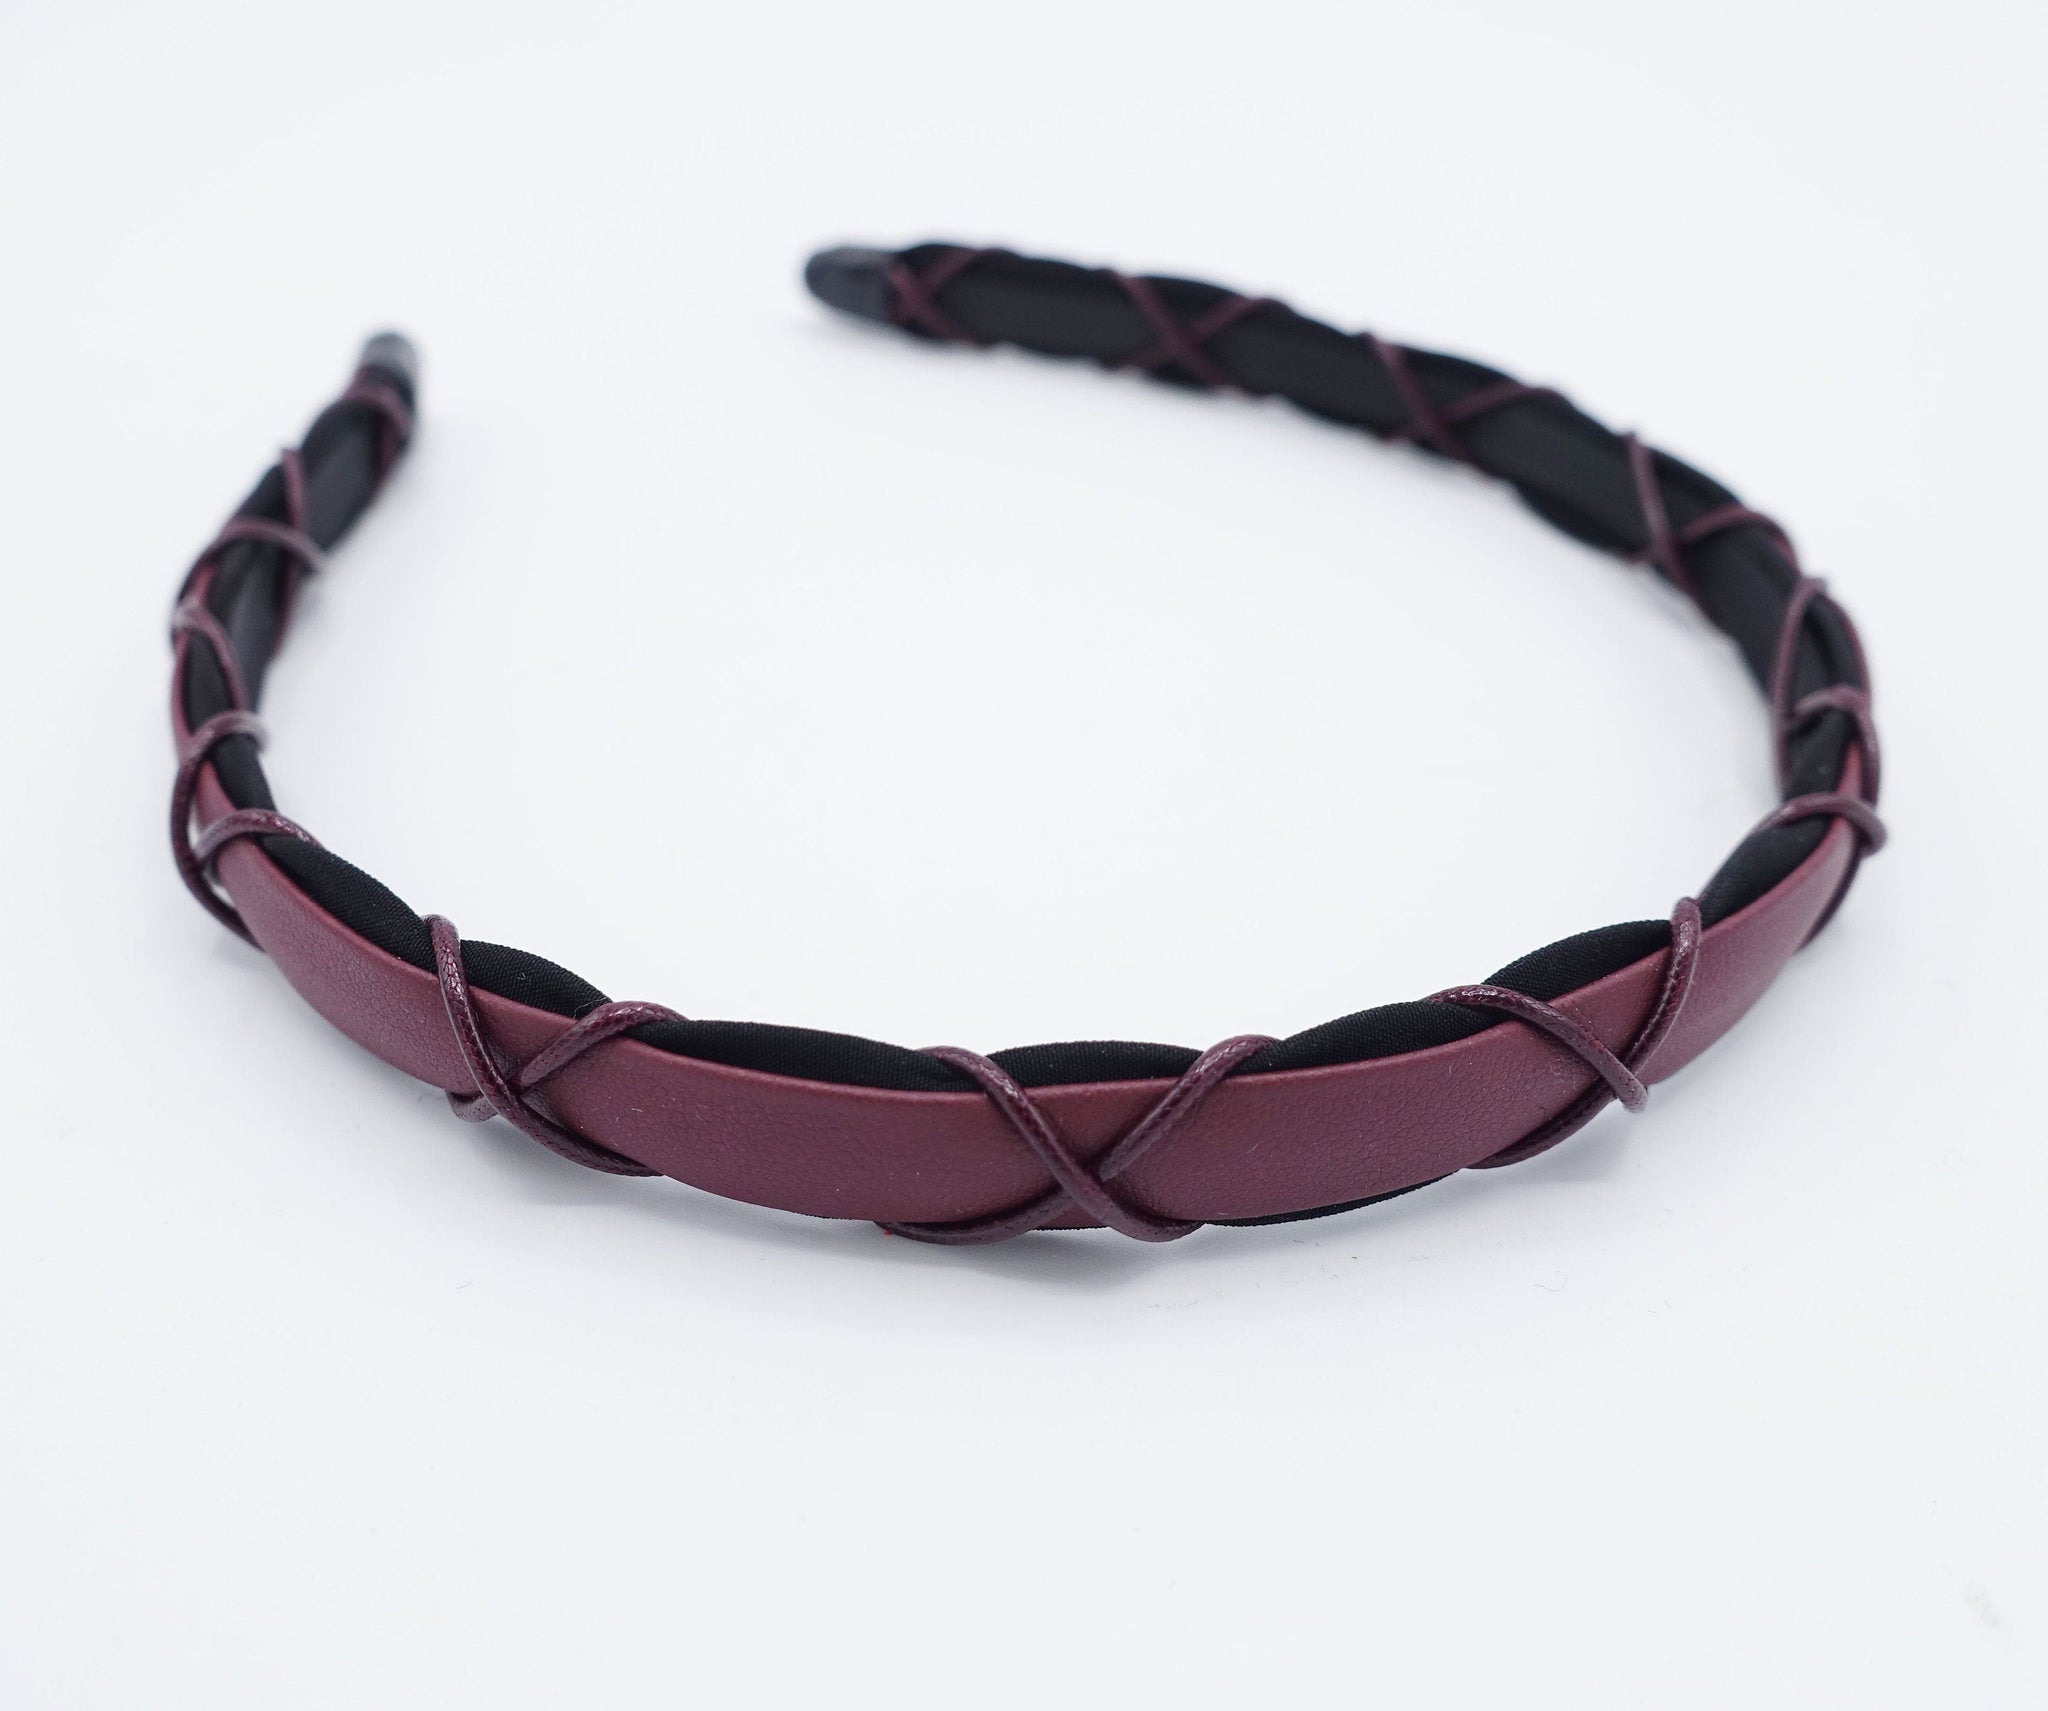 veryshine.com Headband Red wine string x knot decorated leather headband